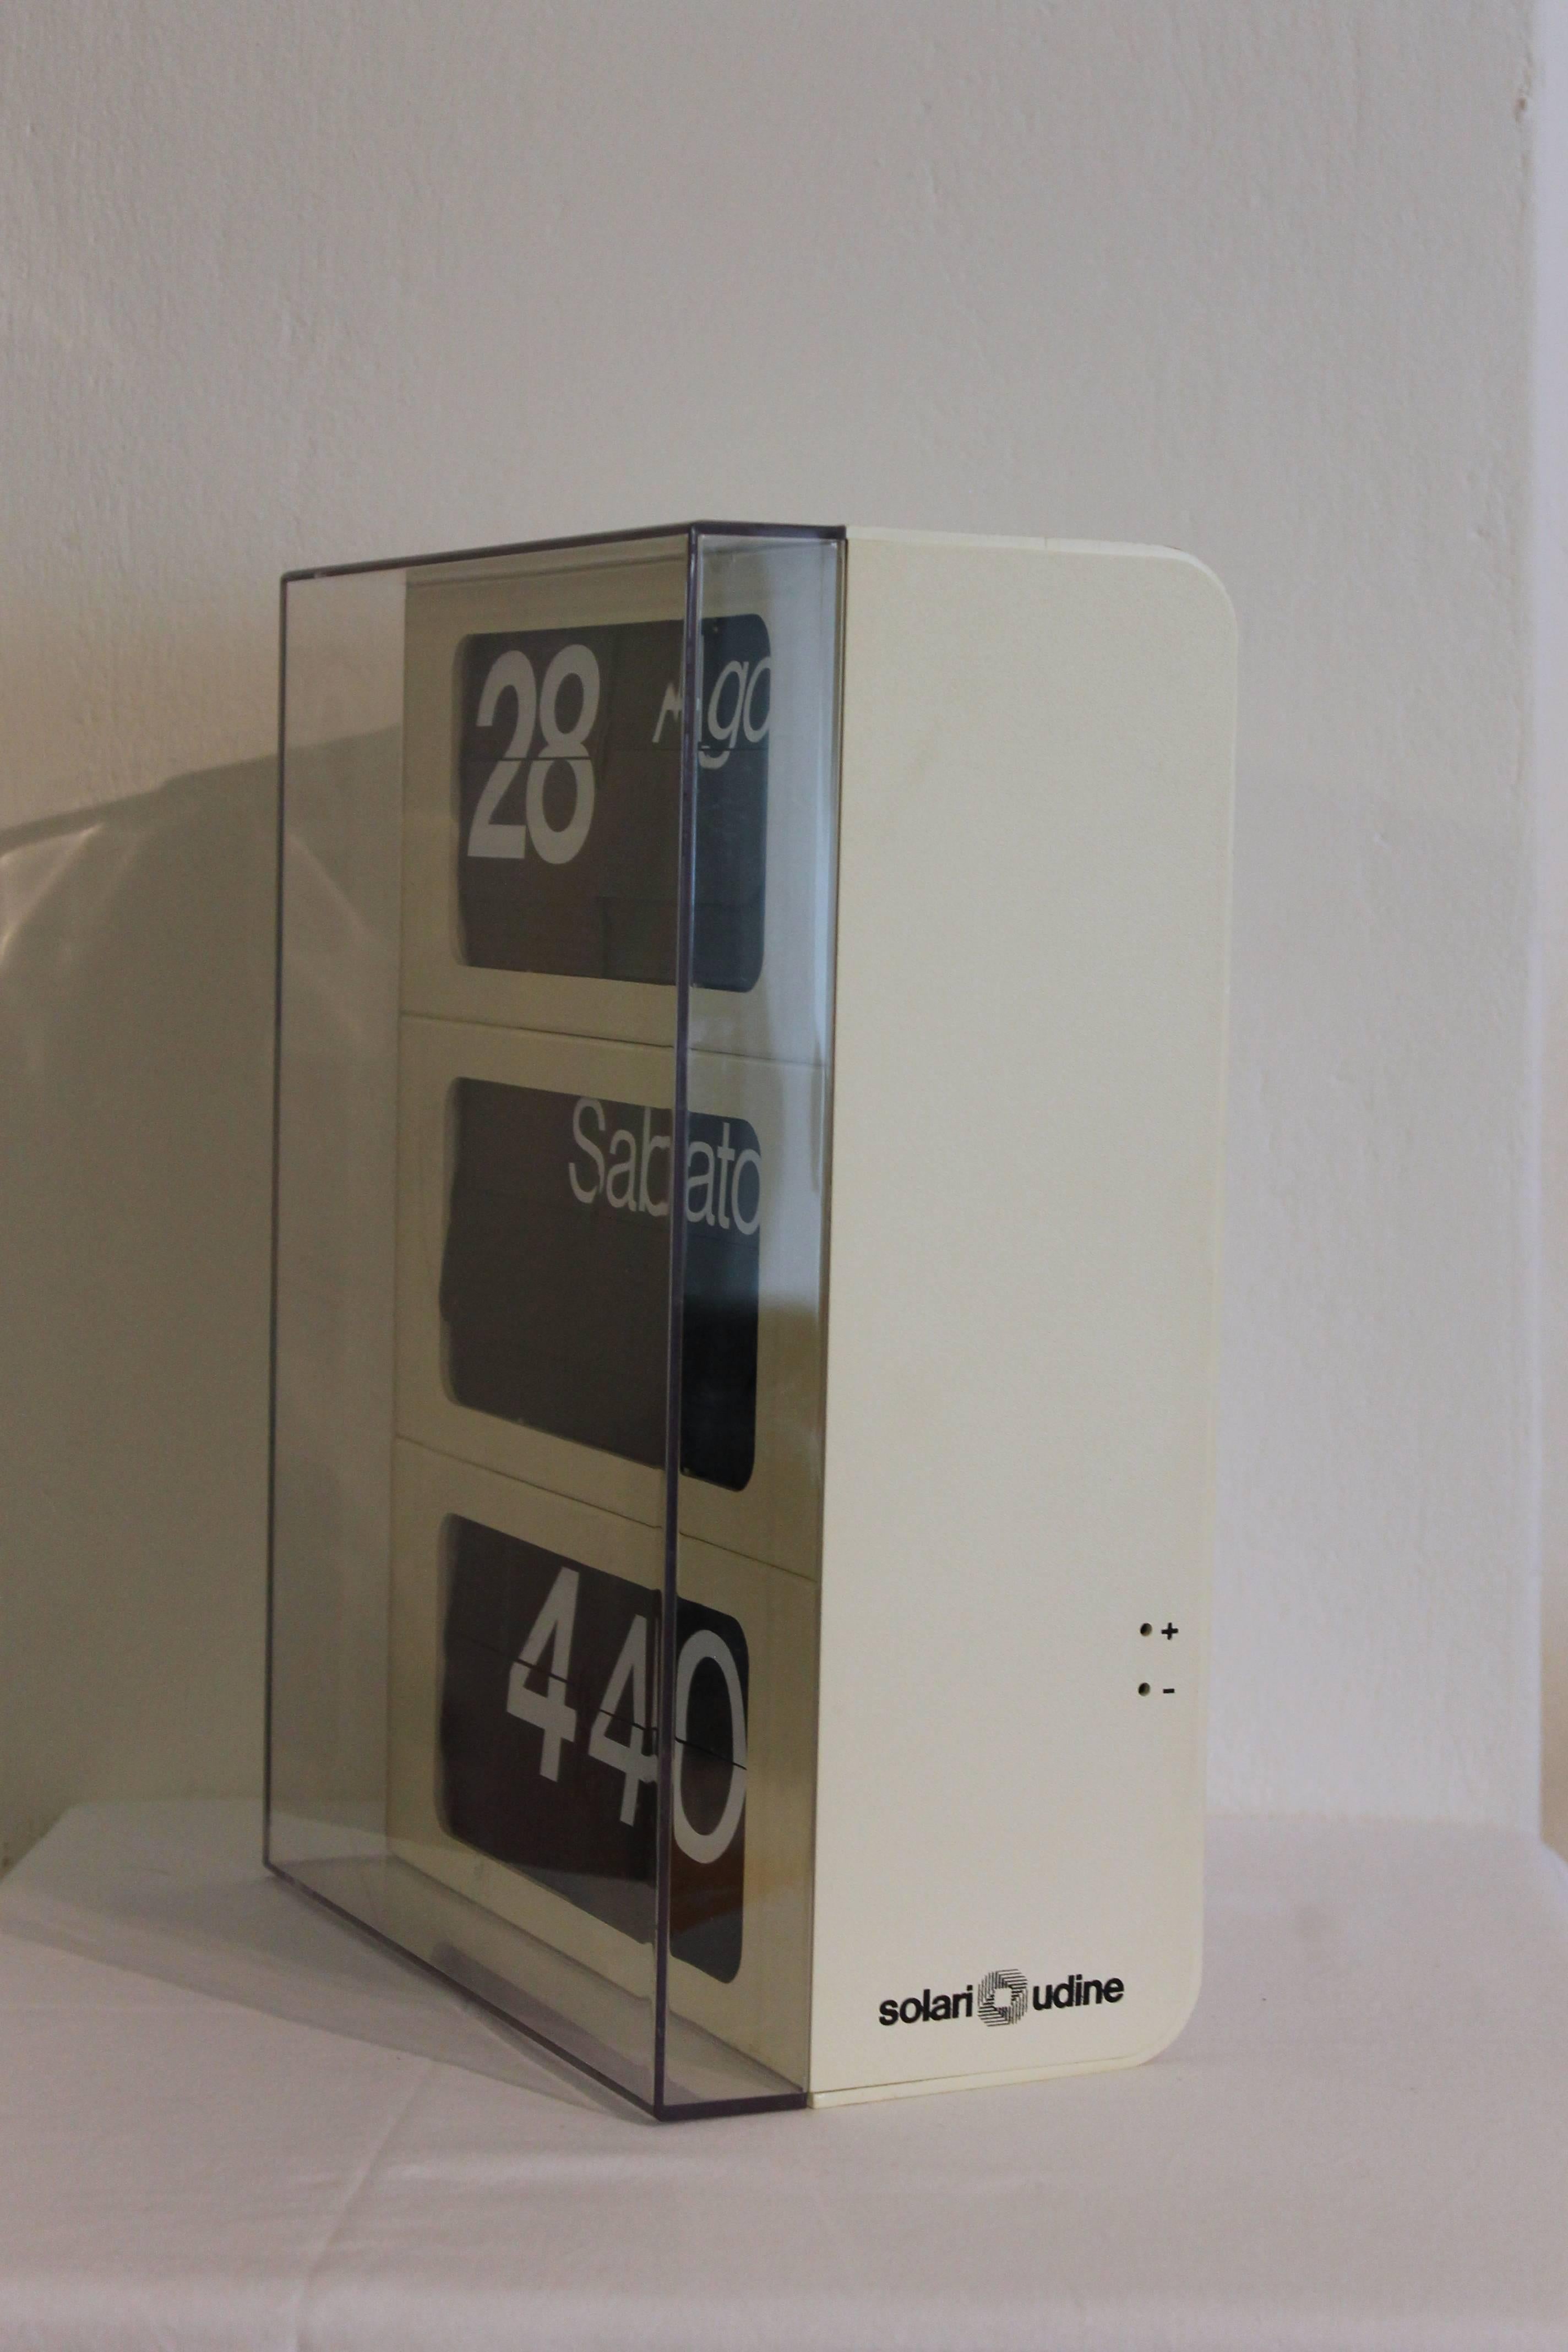 Dator 6041 clock, by Solari Udine, dated 1991.